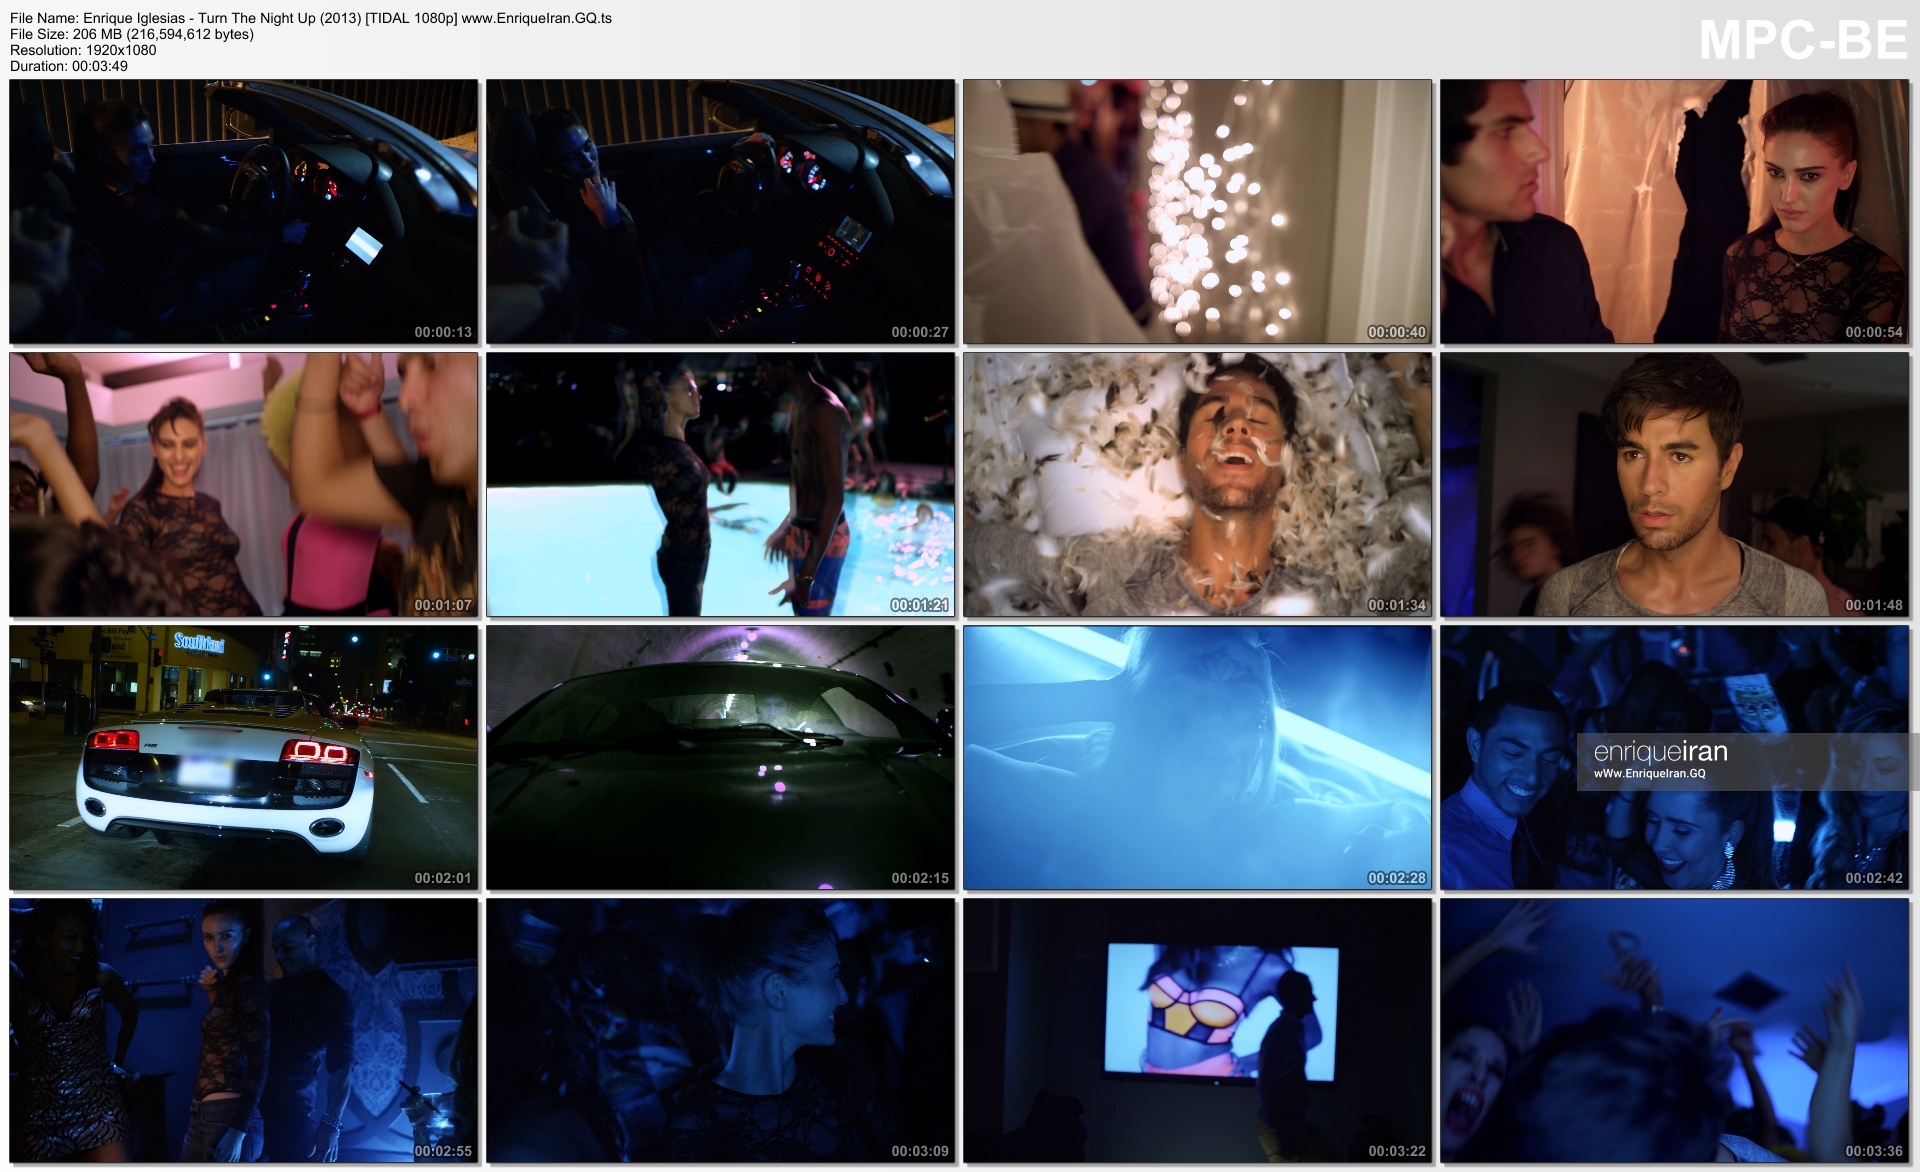 Enrique Iglesias - Turn The Night Up (2013) [TIDAL 1080p] www.EnriqueIran.GQ